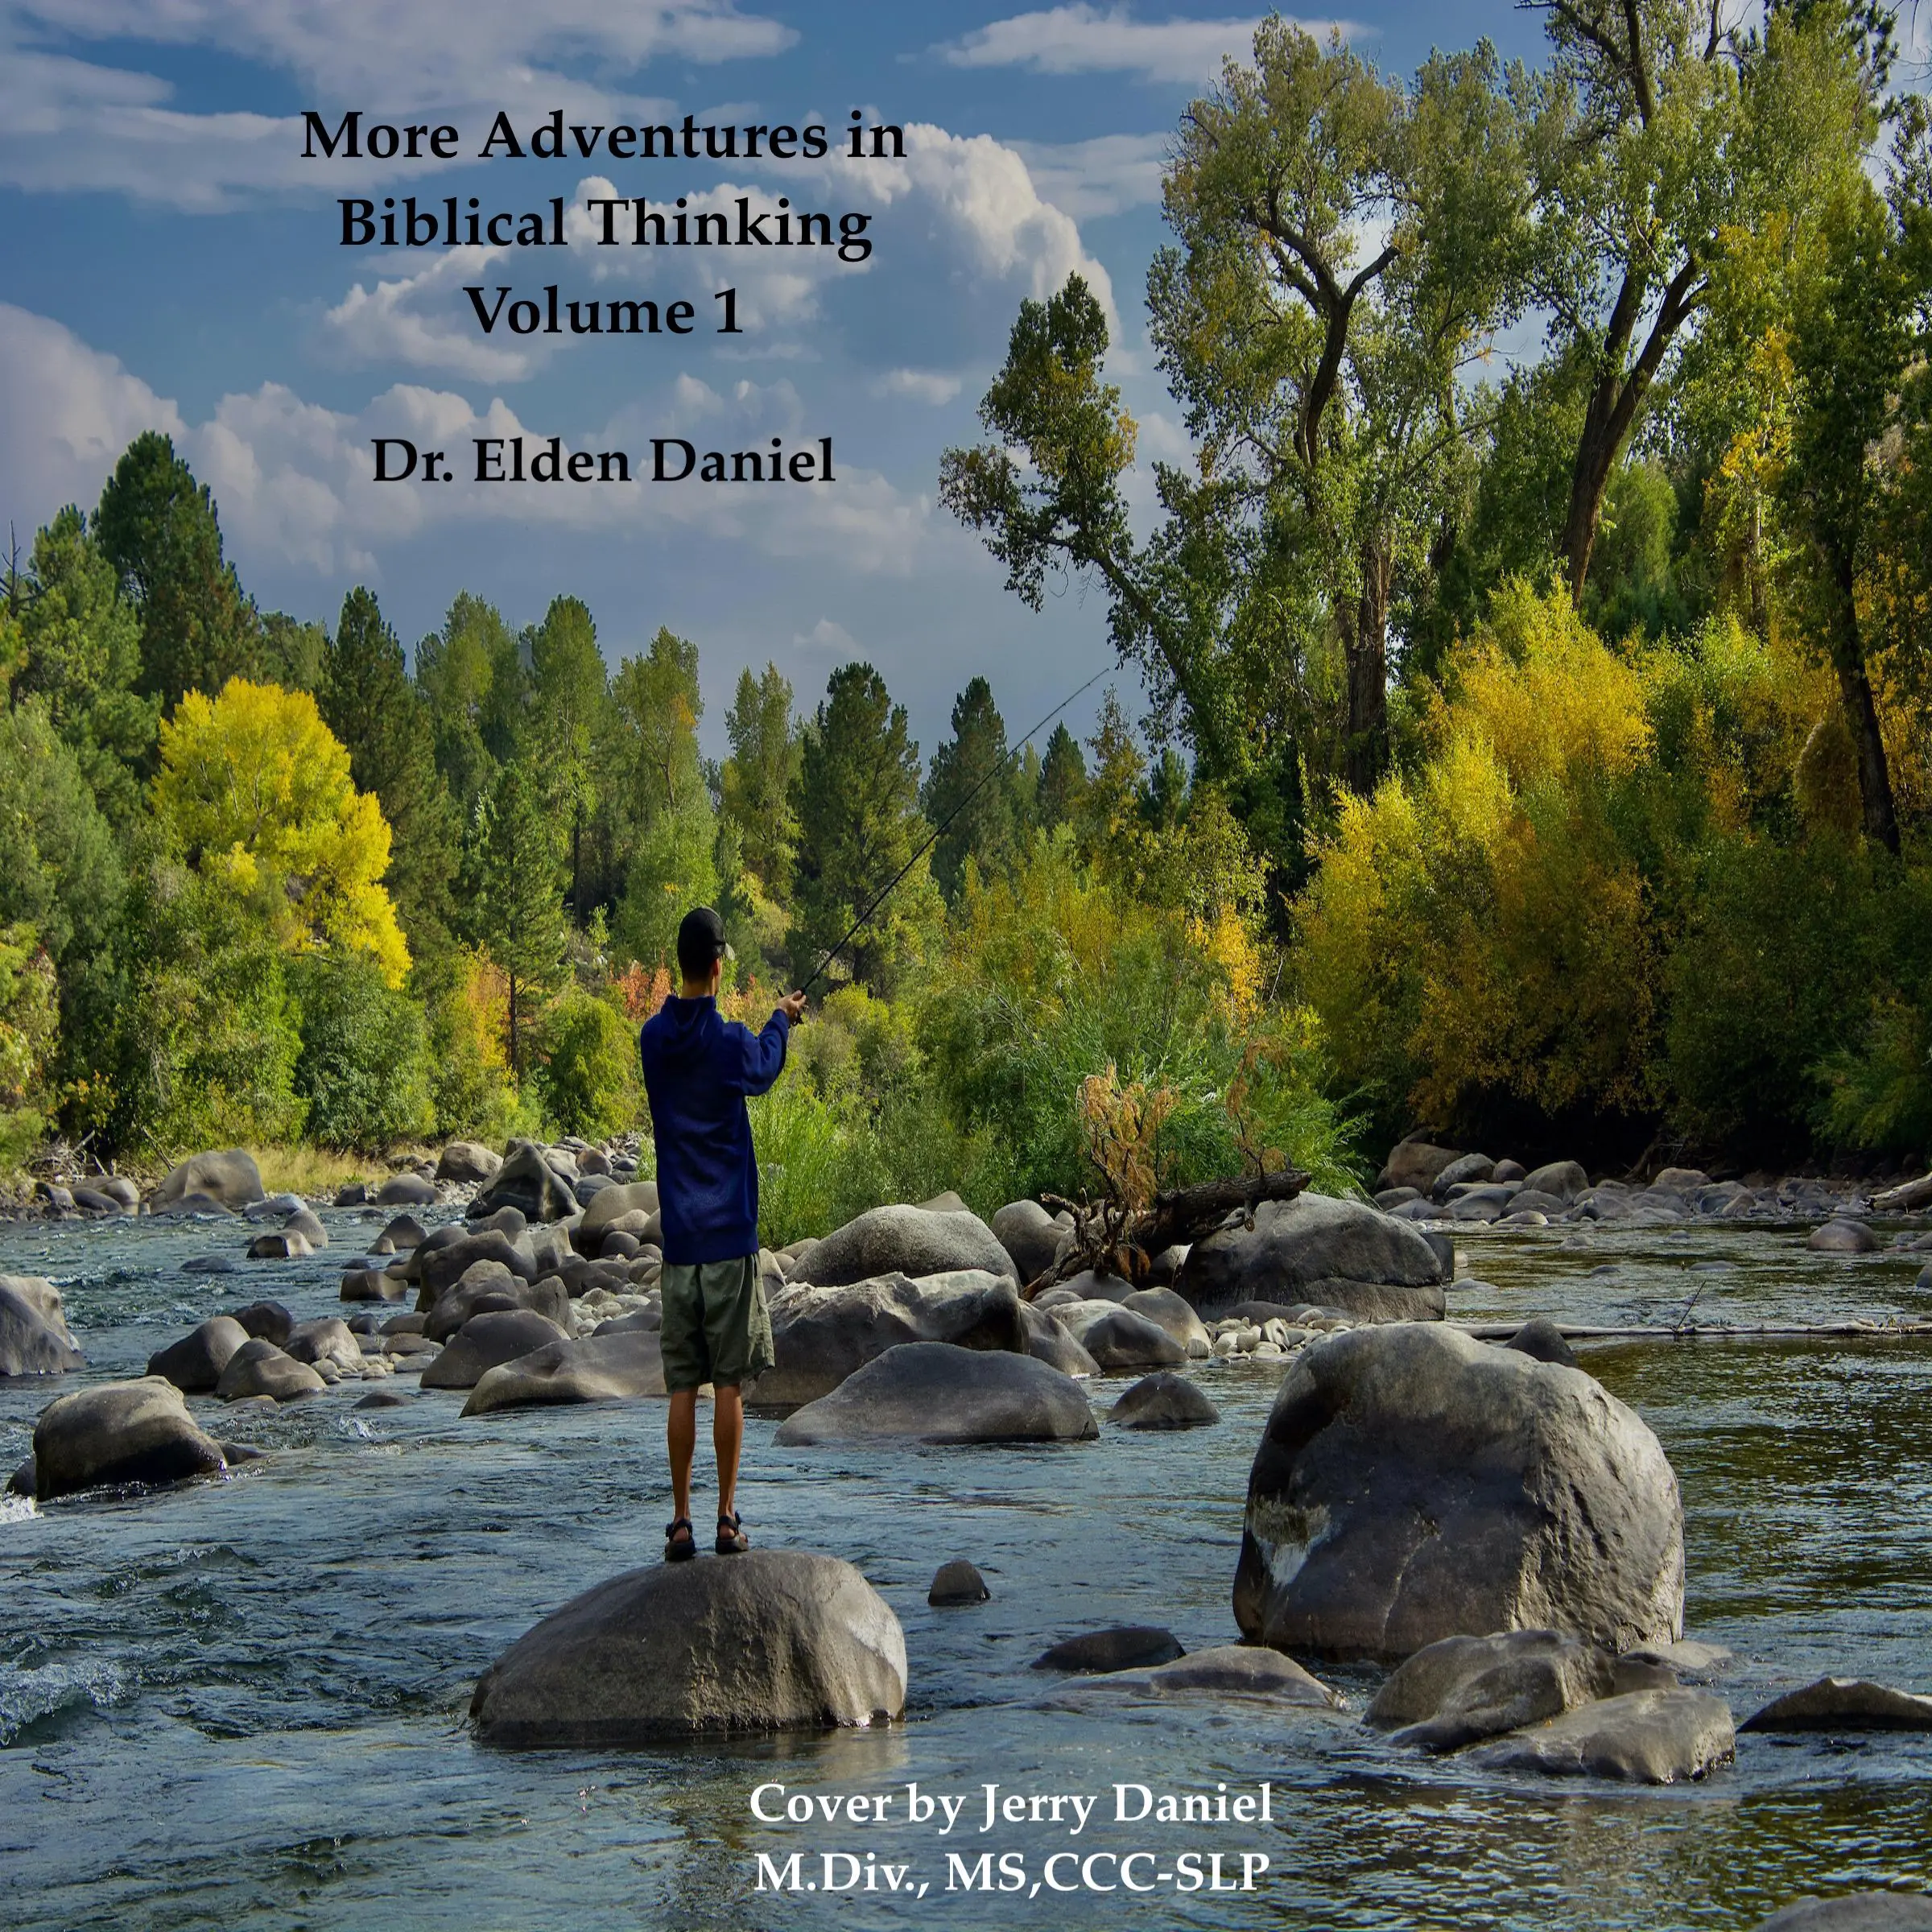 More Adventures in Biblical Thinking Volume One by Dr. Elden Daniel Audiobook